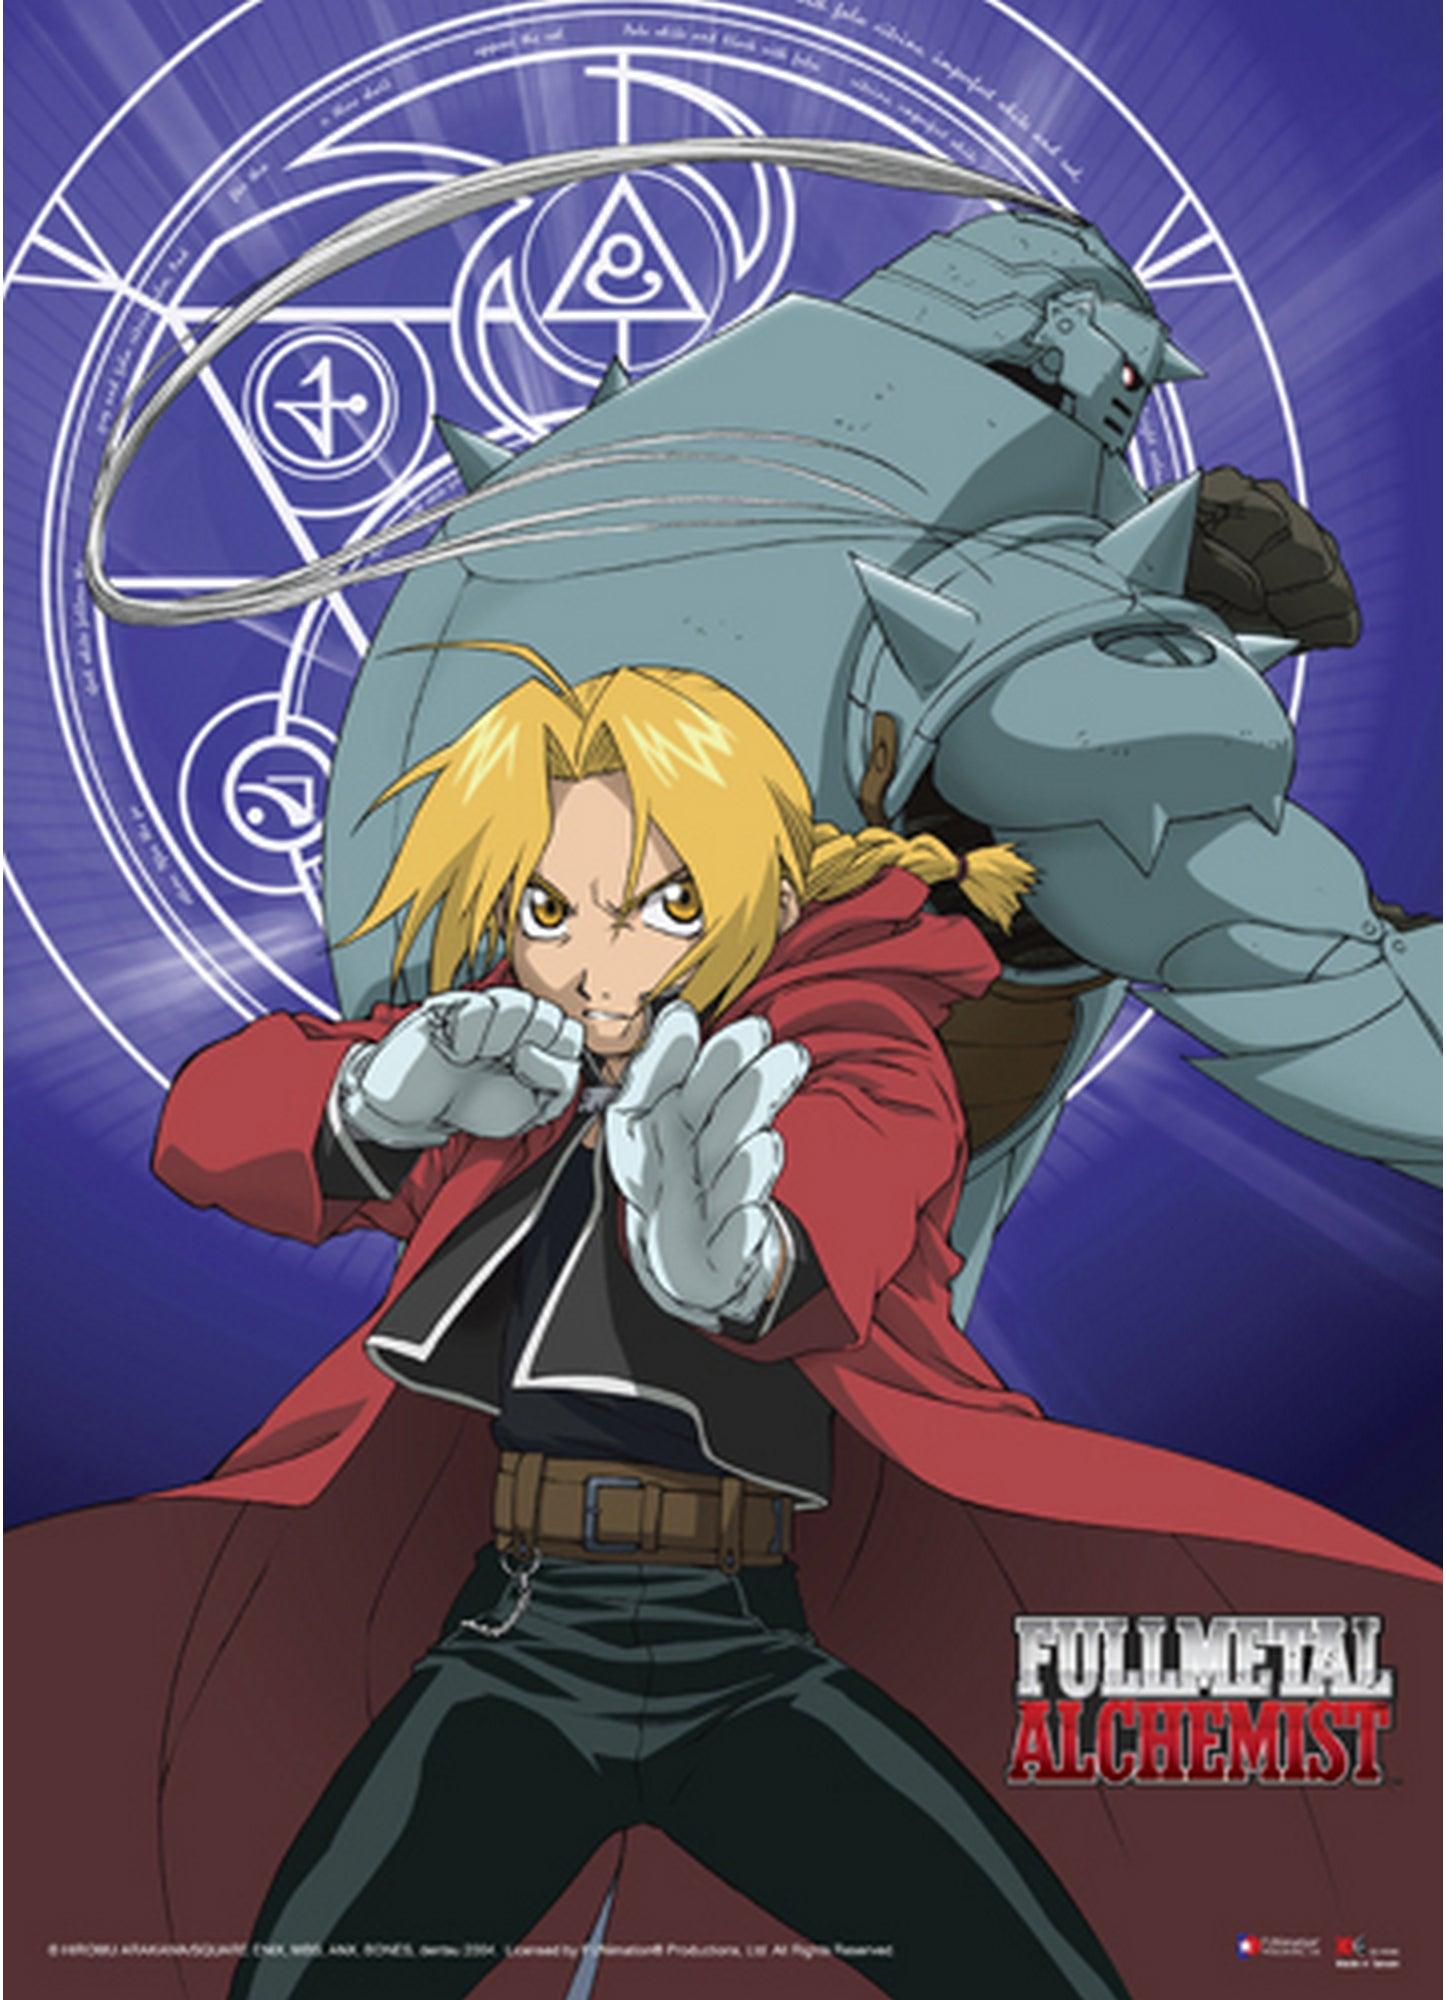 Fullmetal Alchemist: Brotherhood - Anime Photo: Edward and Alphonse Elric